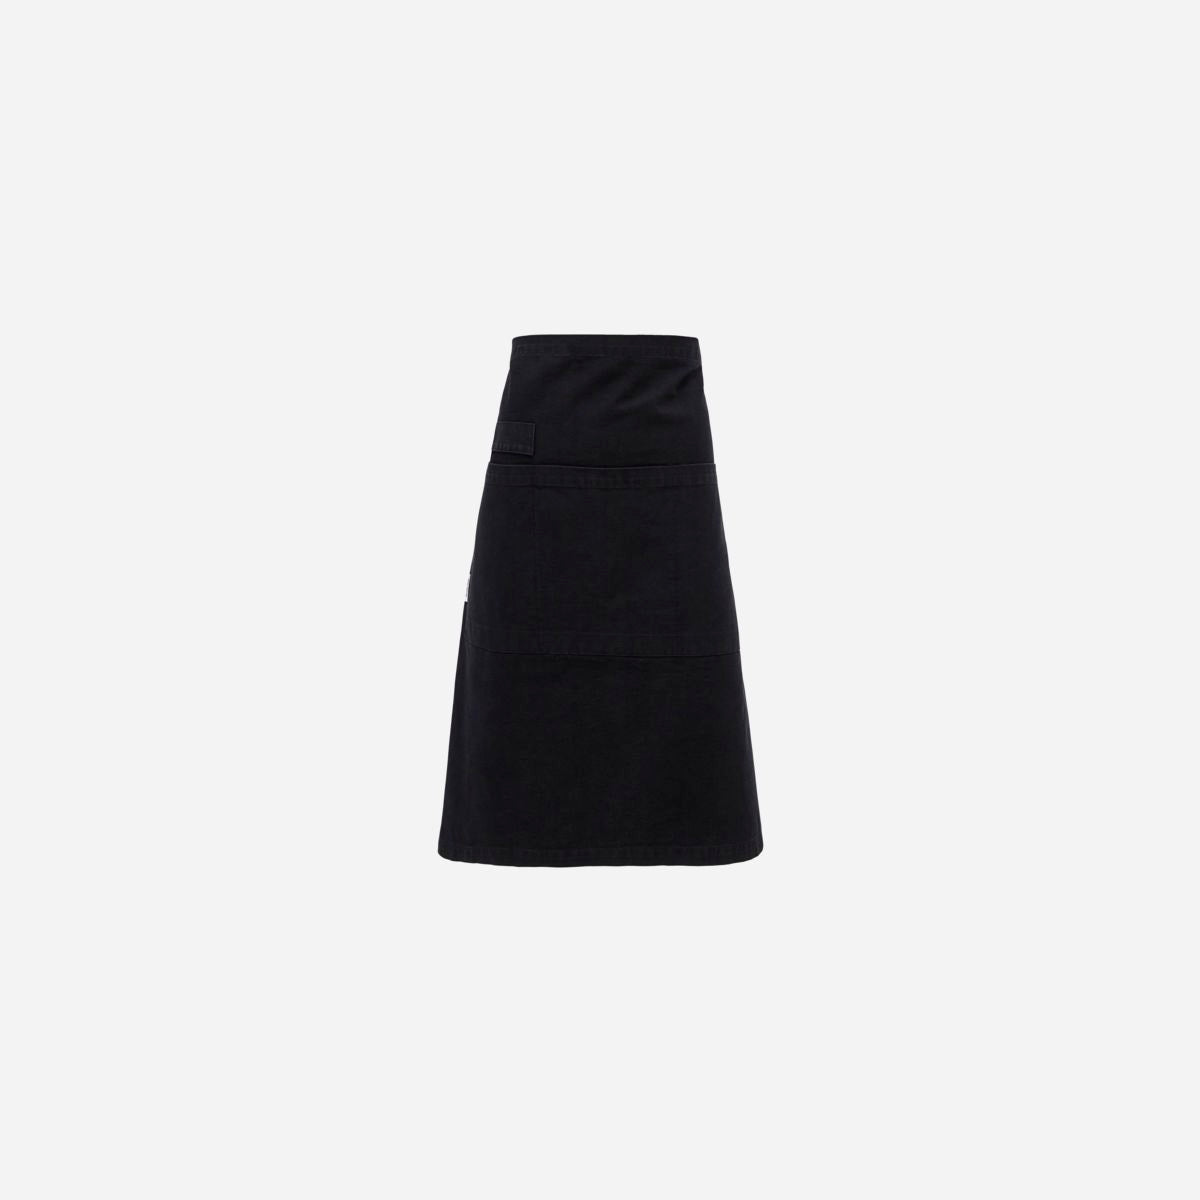 Nicolas Vahe apron, Neat, Black-W: 103 cm, H: 68 cm